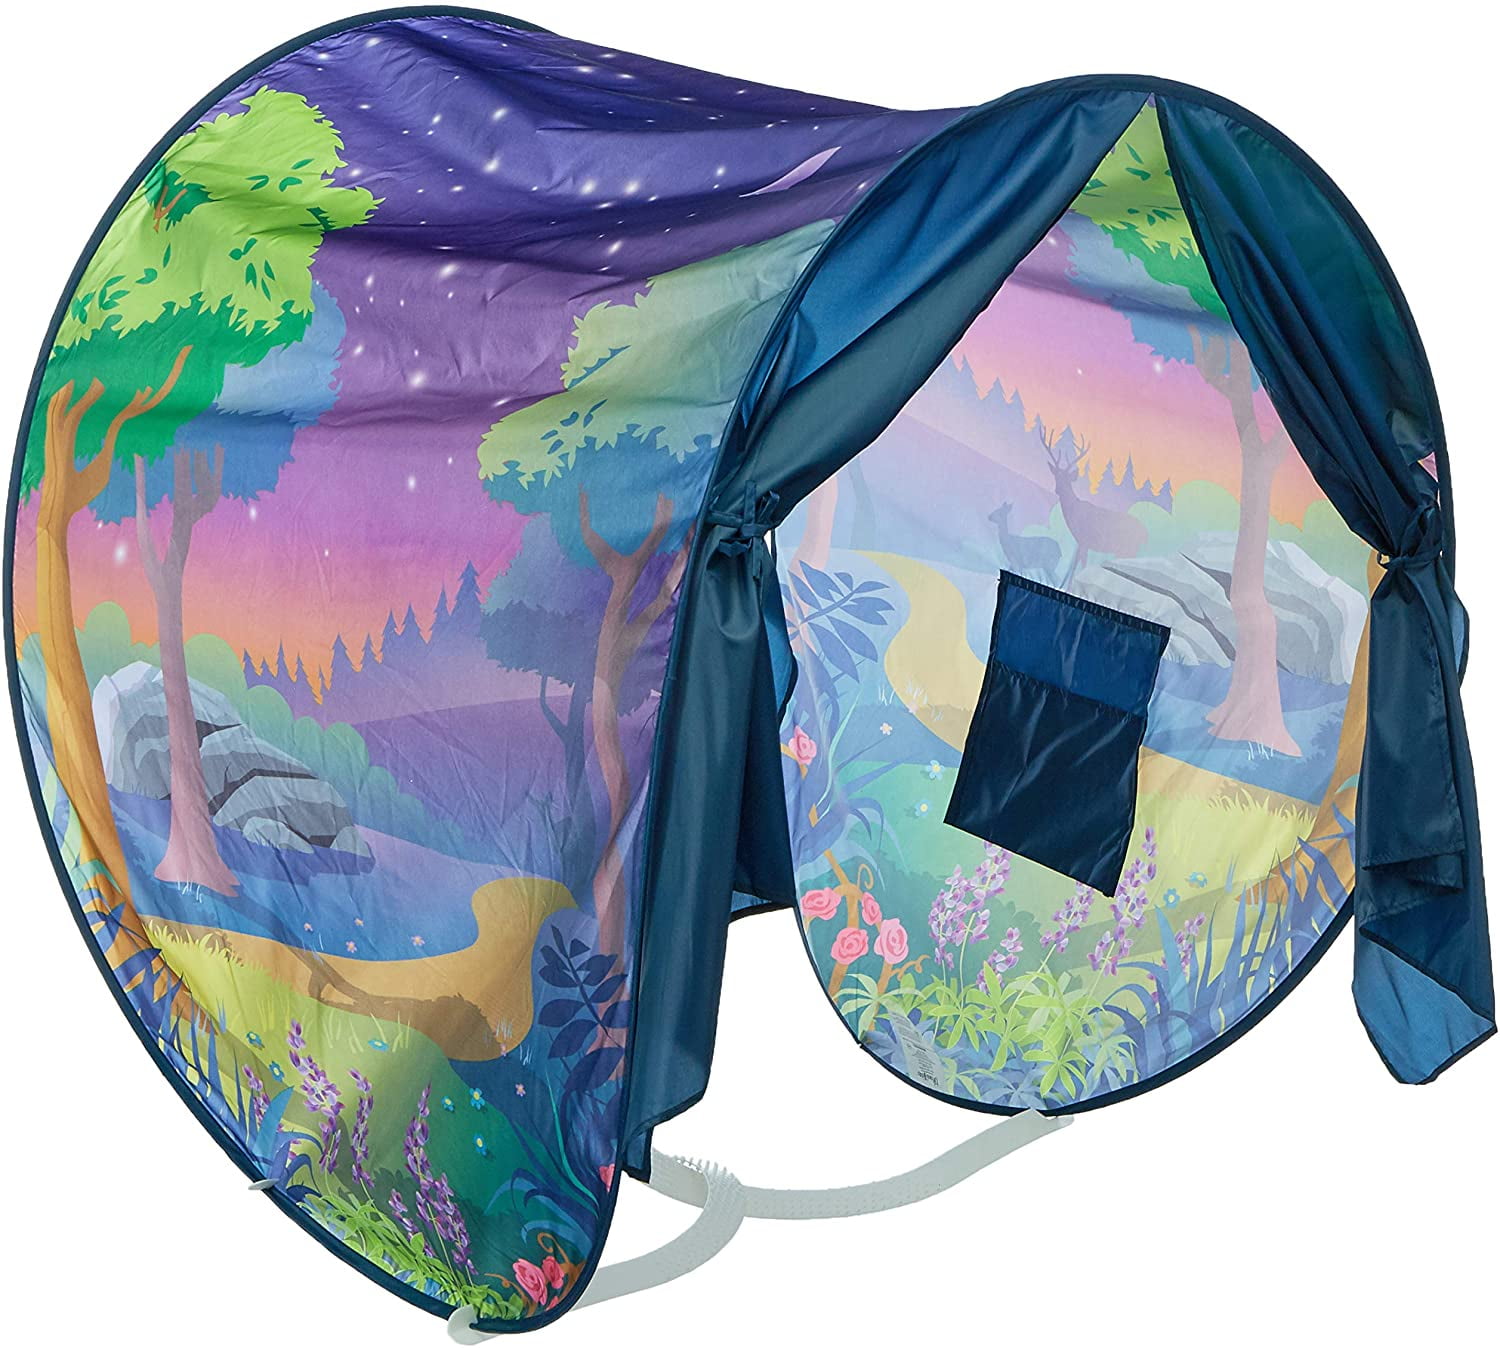 Ontel Dream Tents Winter Wonderland Kids Pop Up Play Tent for sale online 